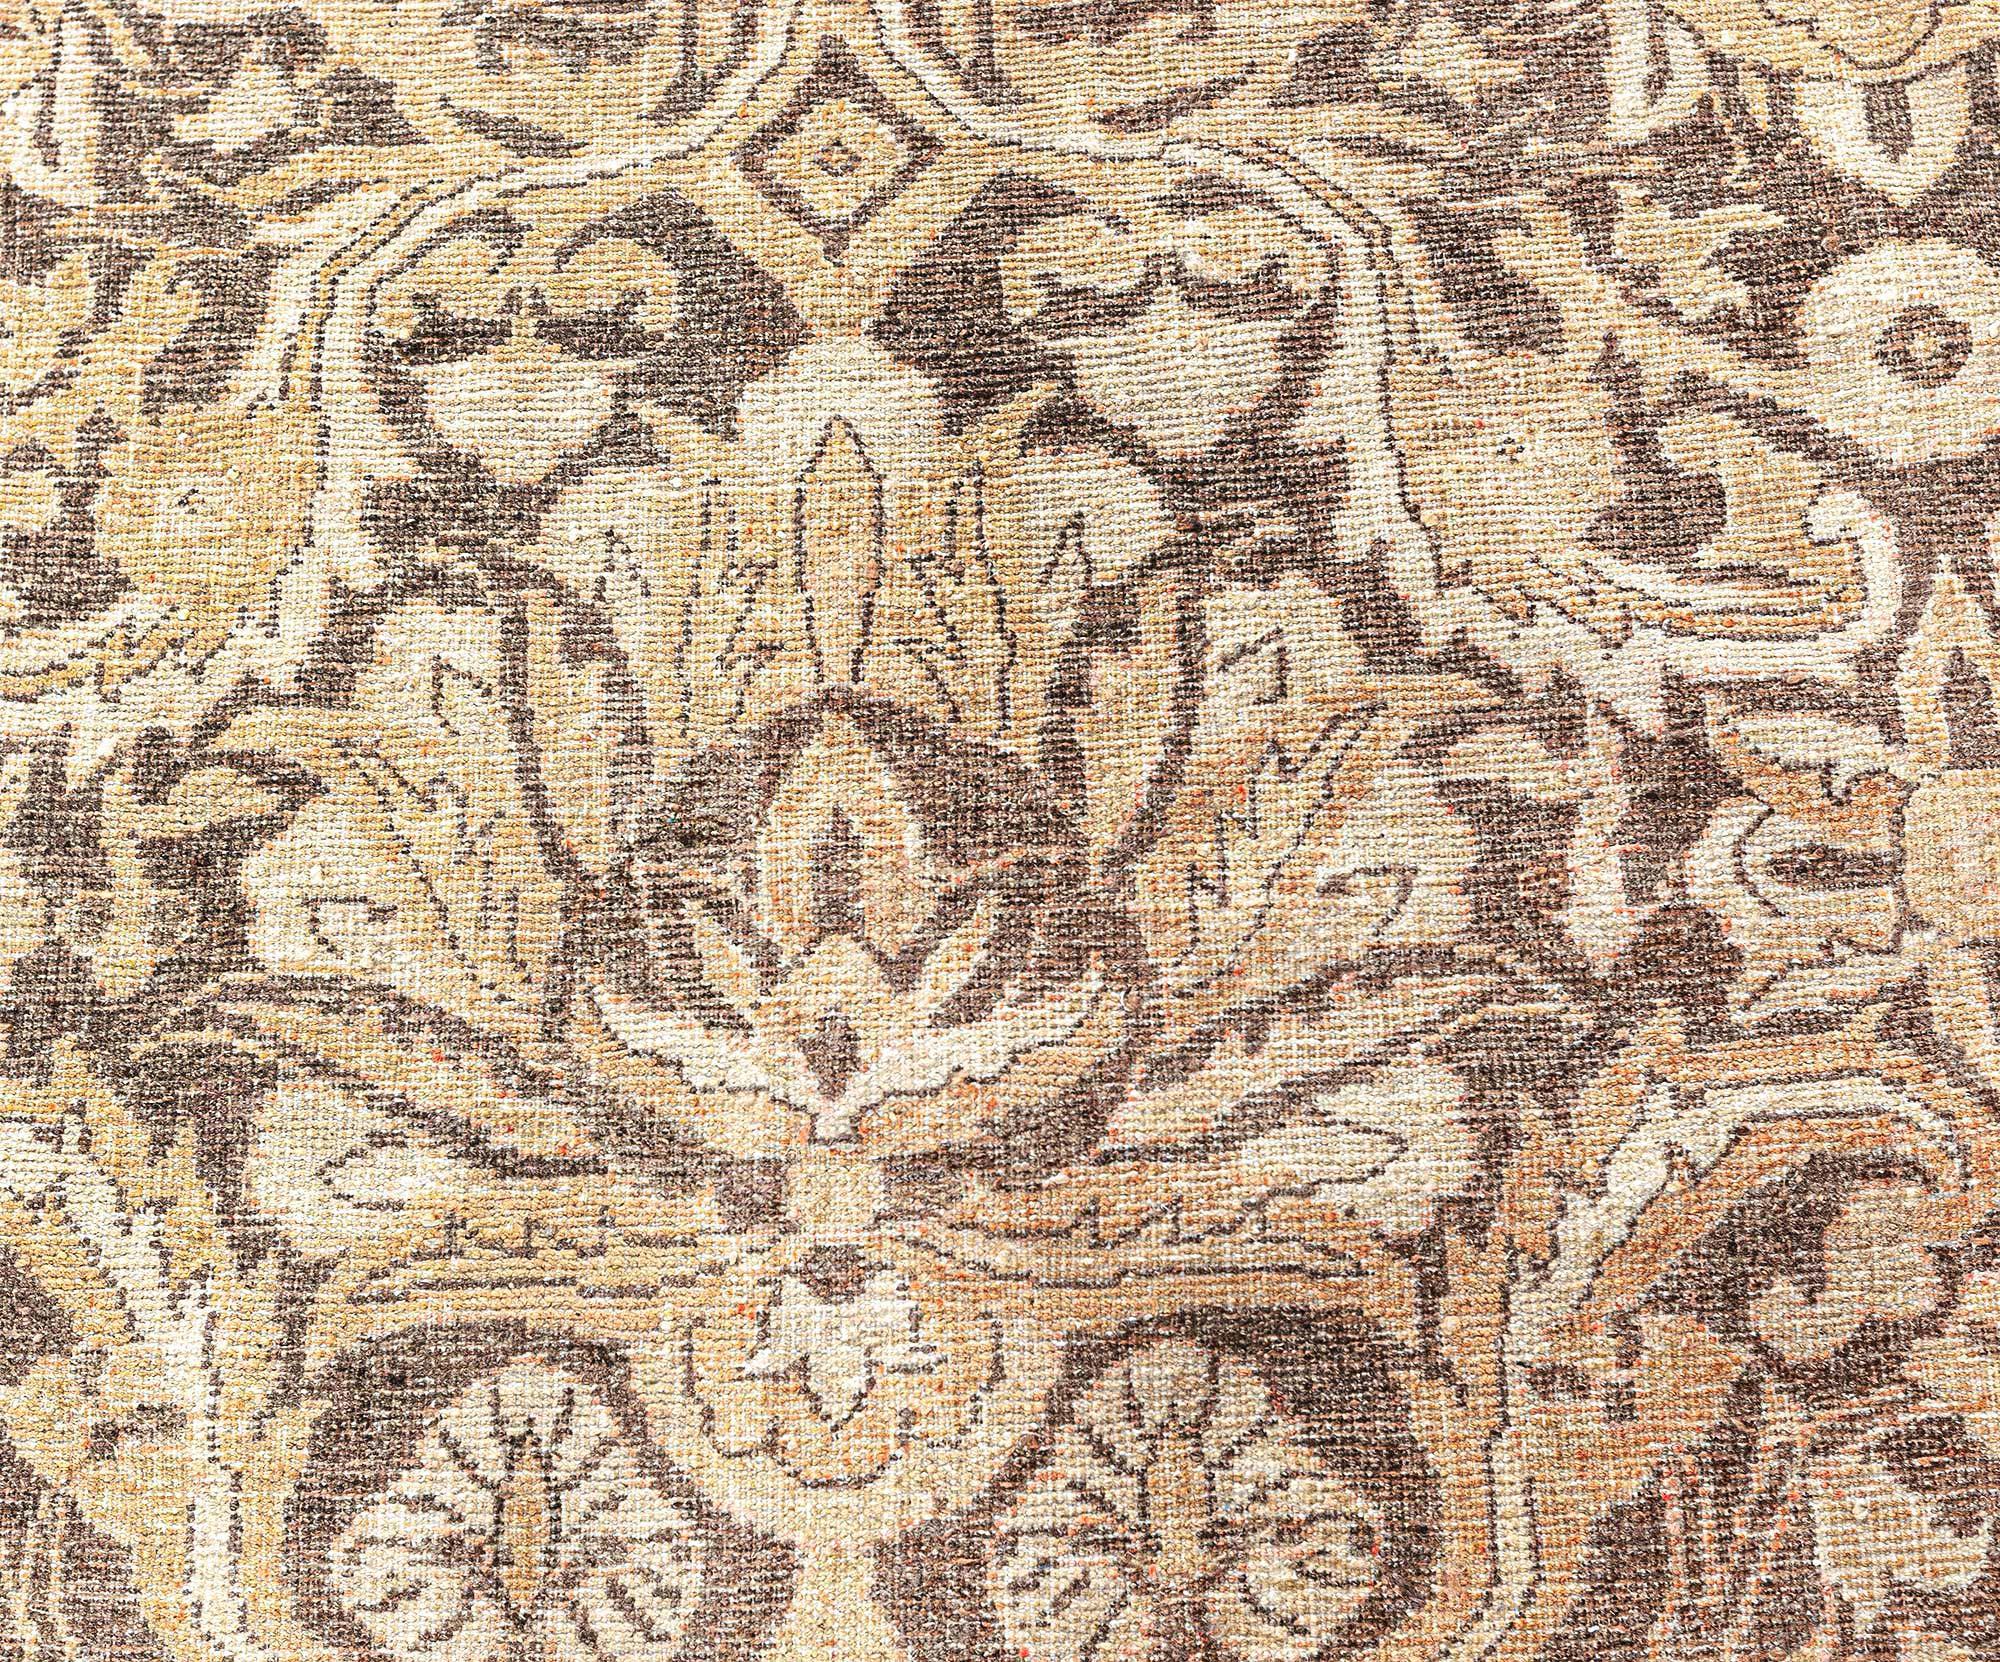 Authentic Indian Amritsar handmade wool rug by Doris Leslie Blau
Size: 10'0